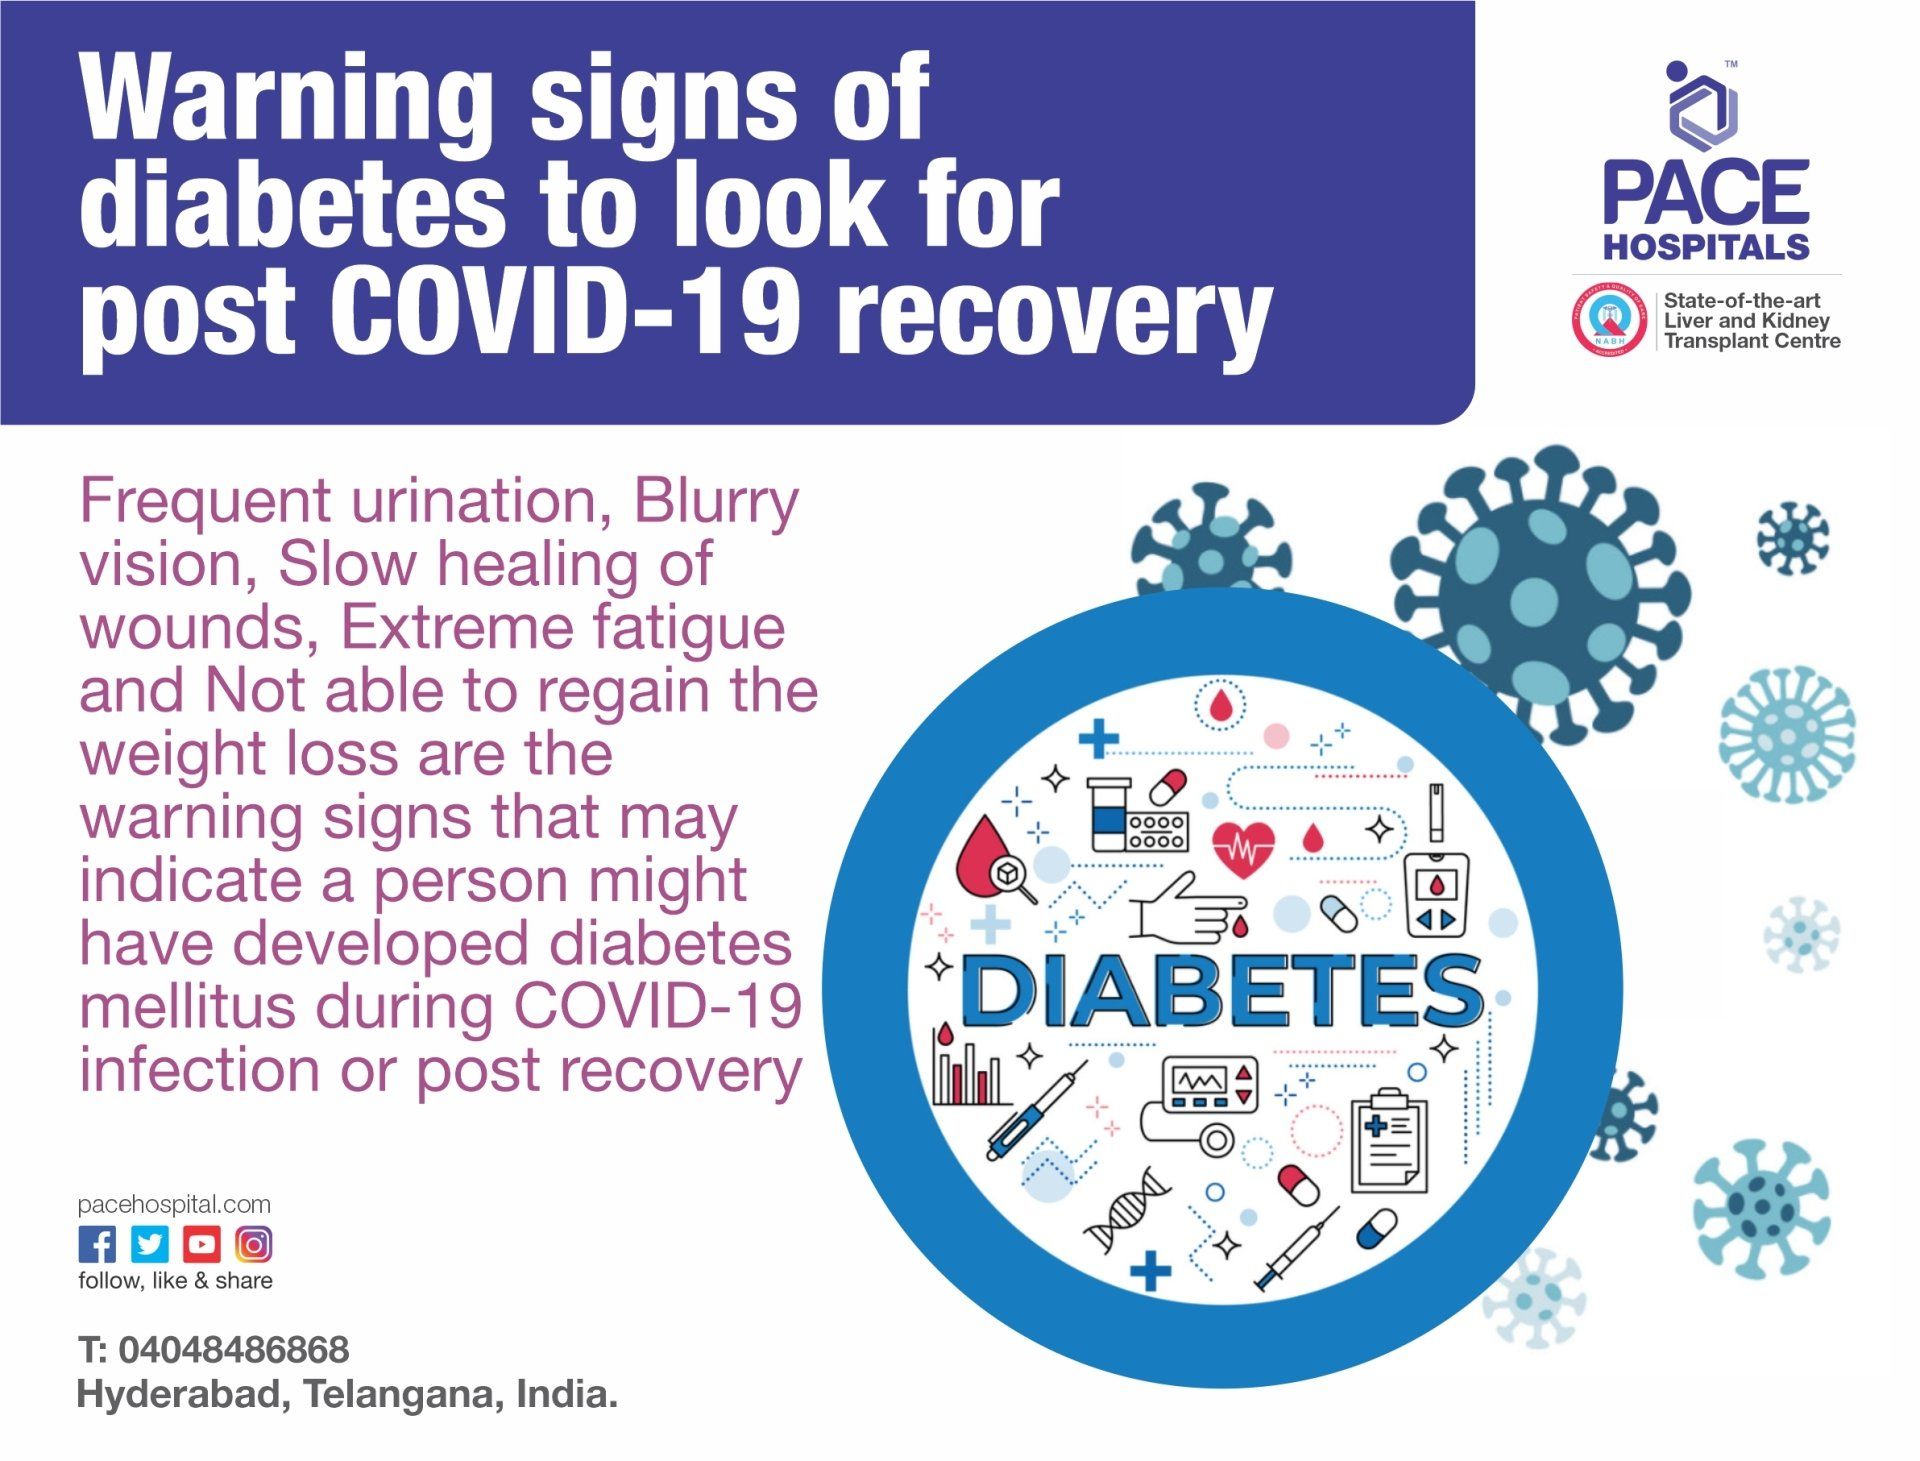 Coronavirus - warning signs of diabetes after COVID-19